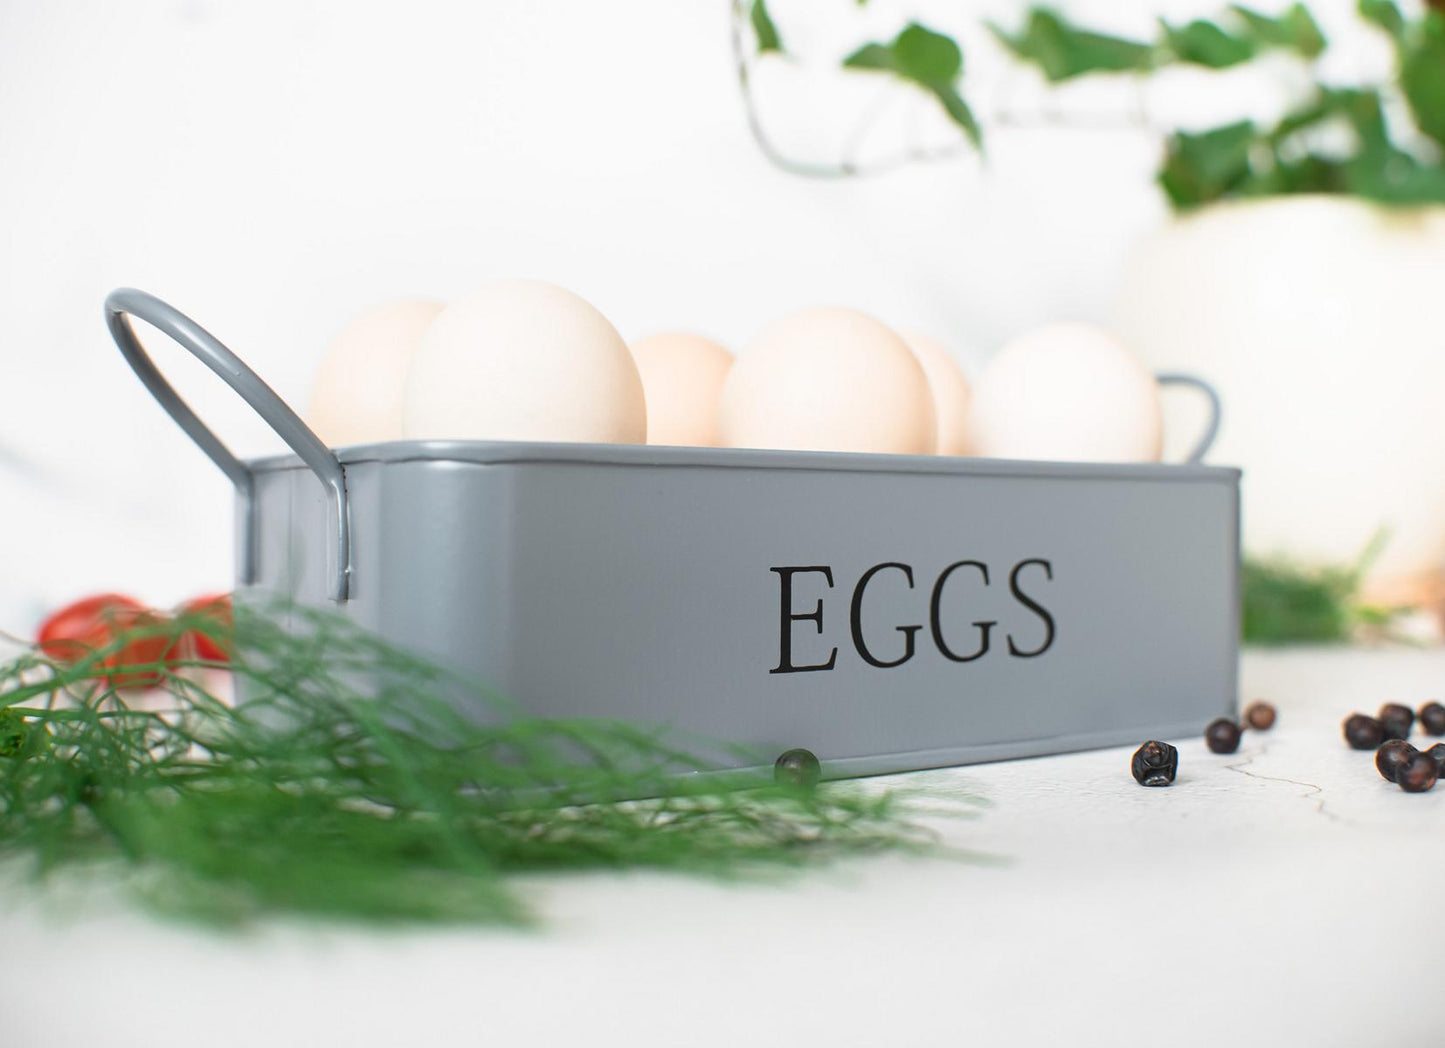 6er Eierhalter aus Metall Eierständer Eierbecher Eierteller Eierbehälter